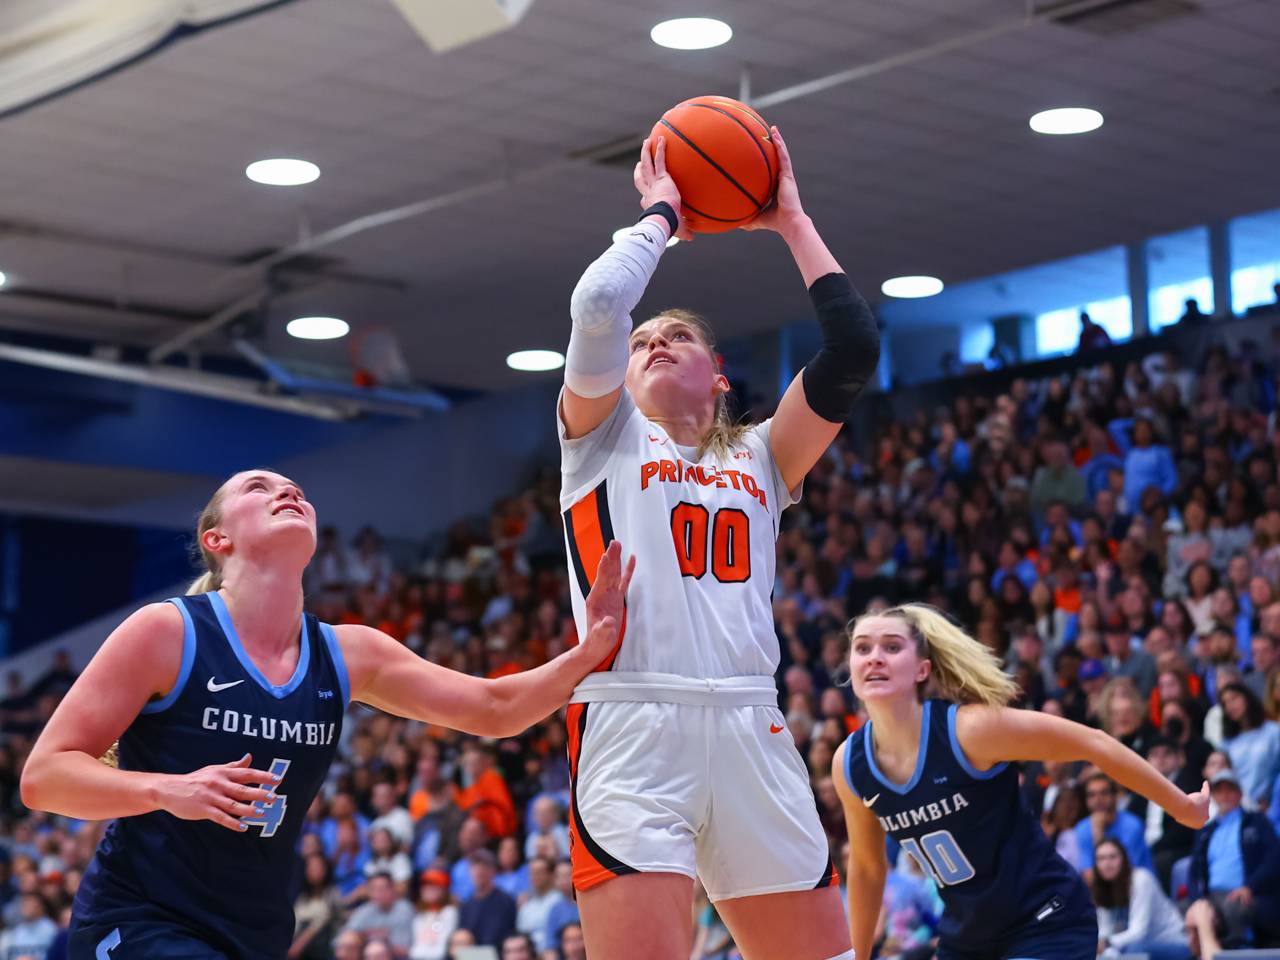 Princeton's Ellie Mitchell shoots a basket.